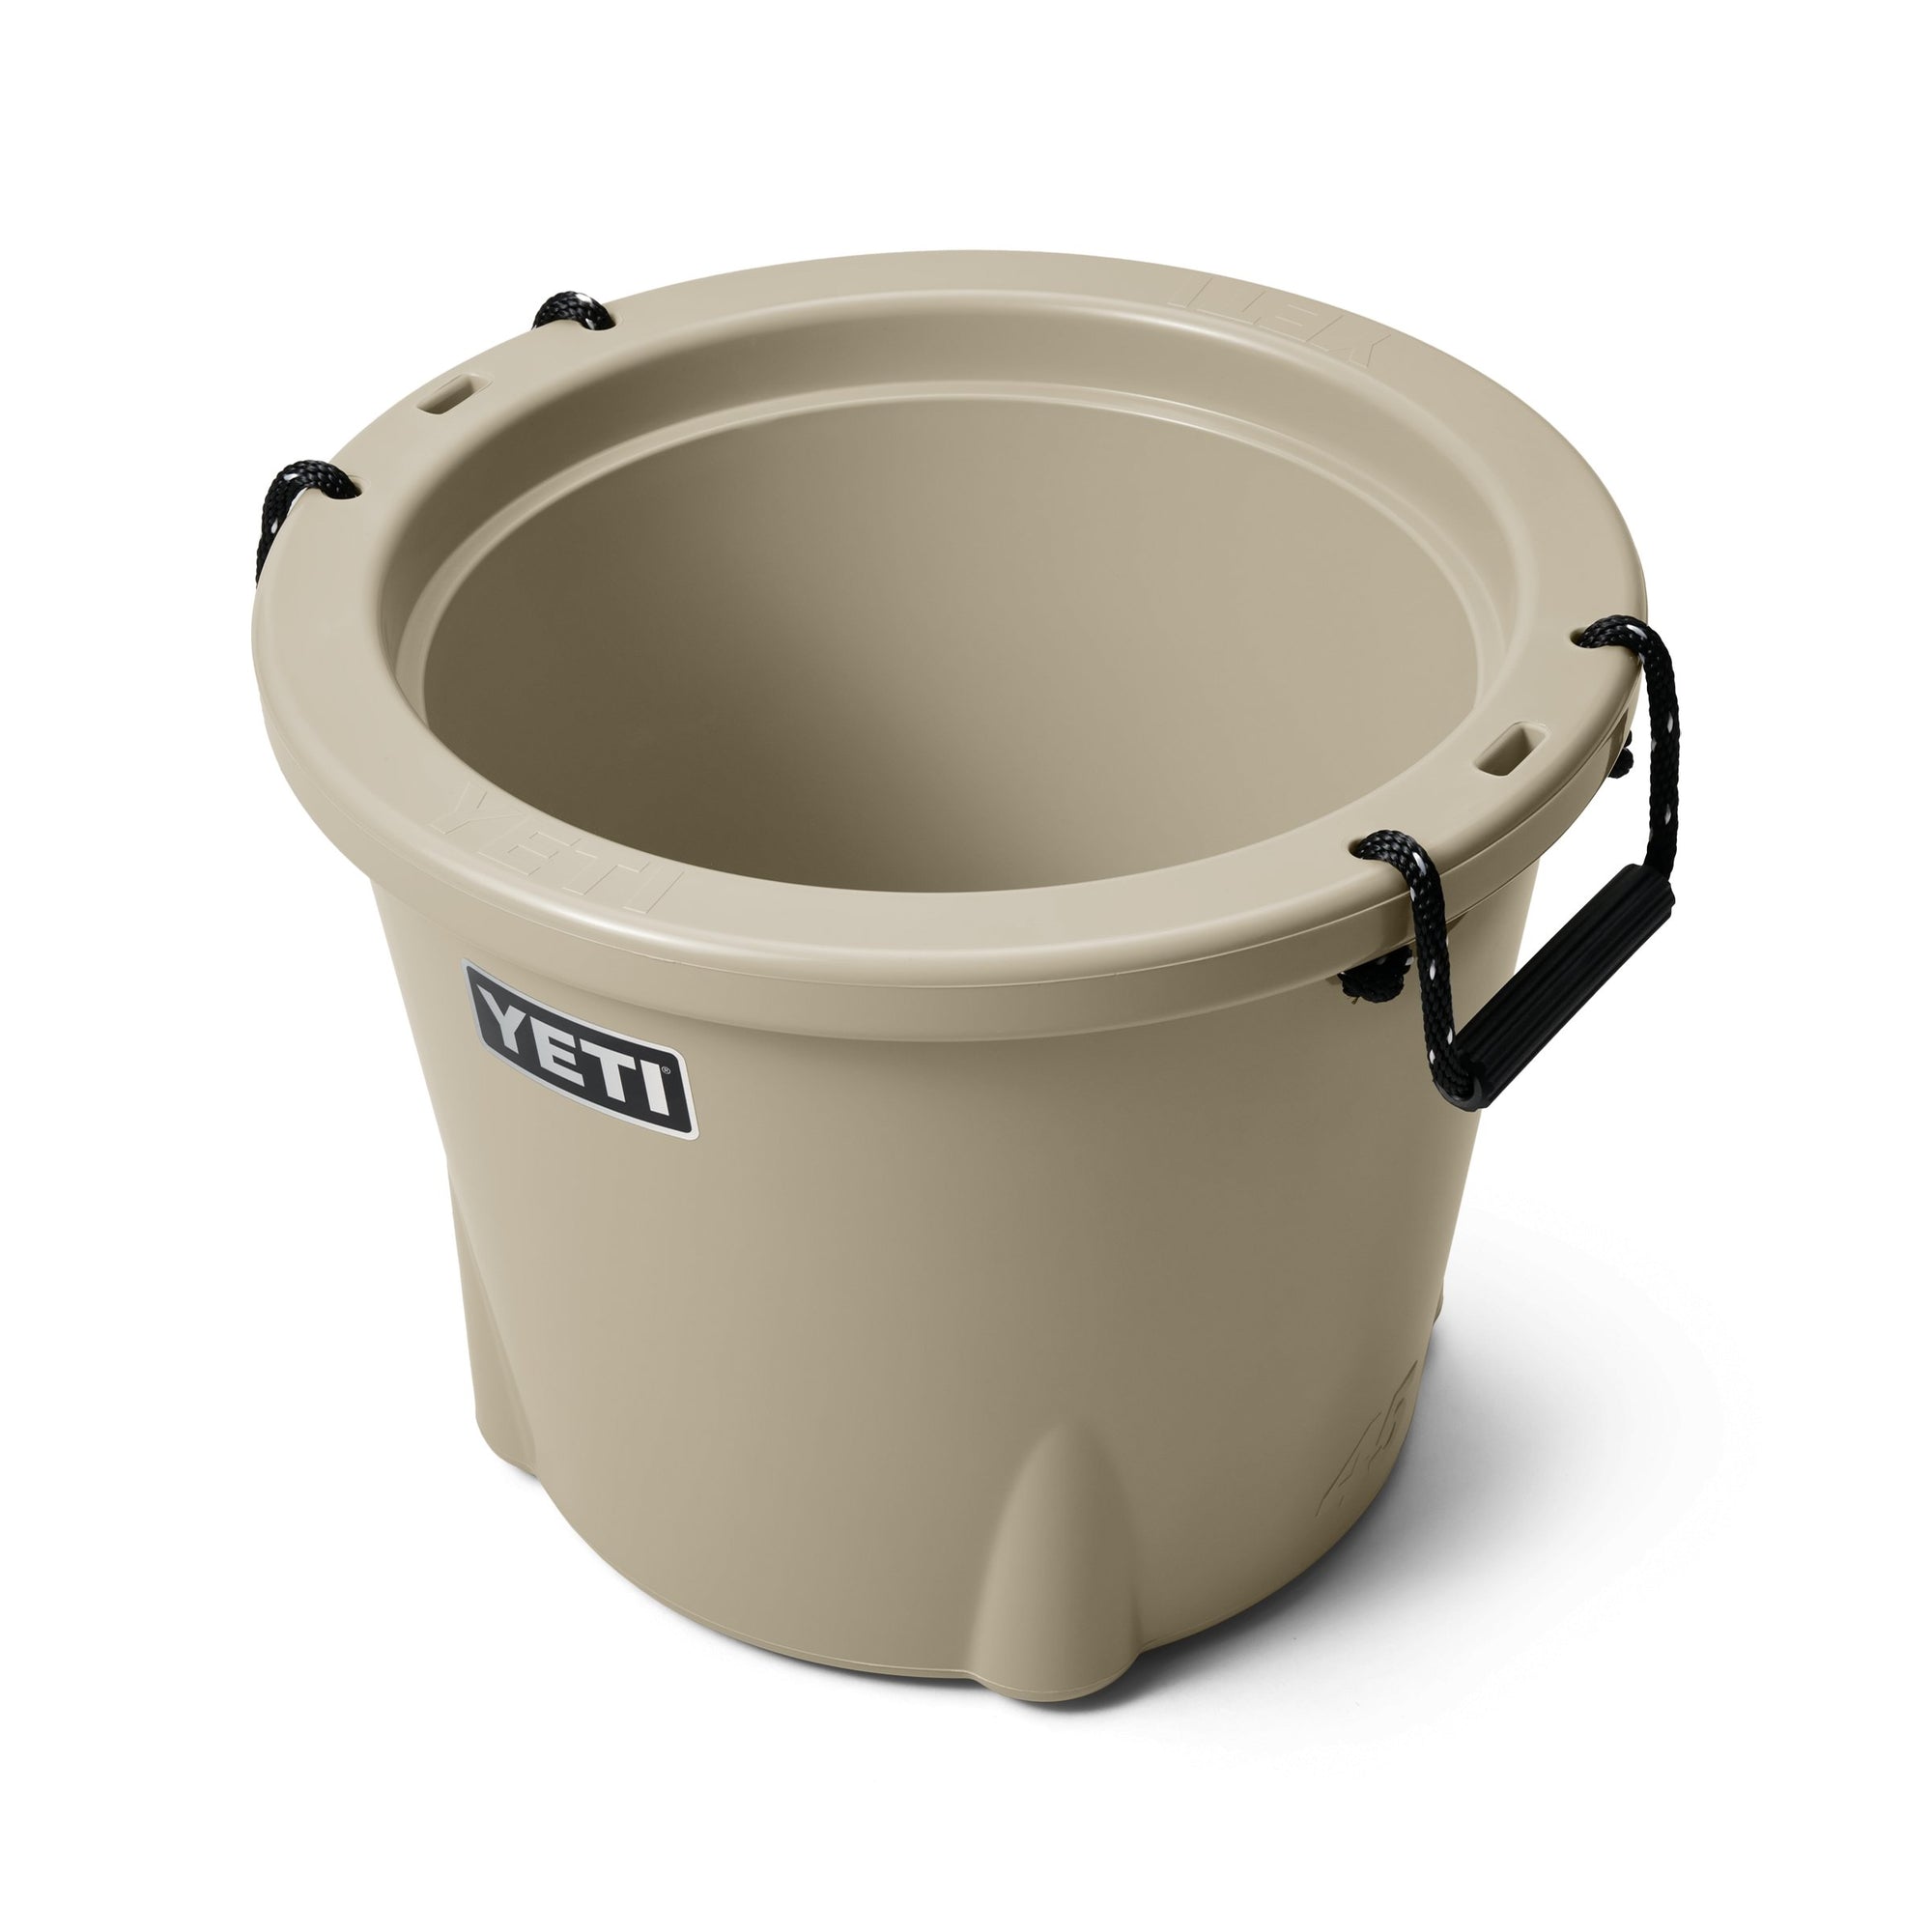 YETI® Tank 45 Insulated Ice Bucket - Tan